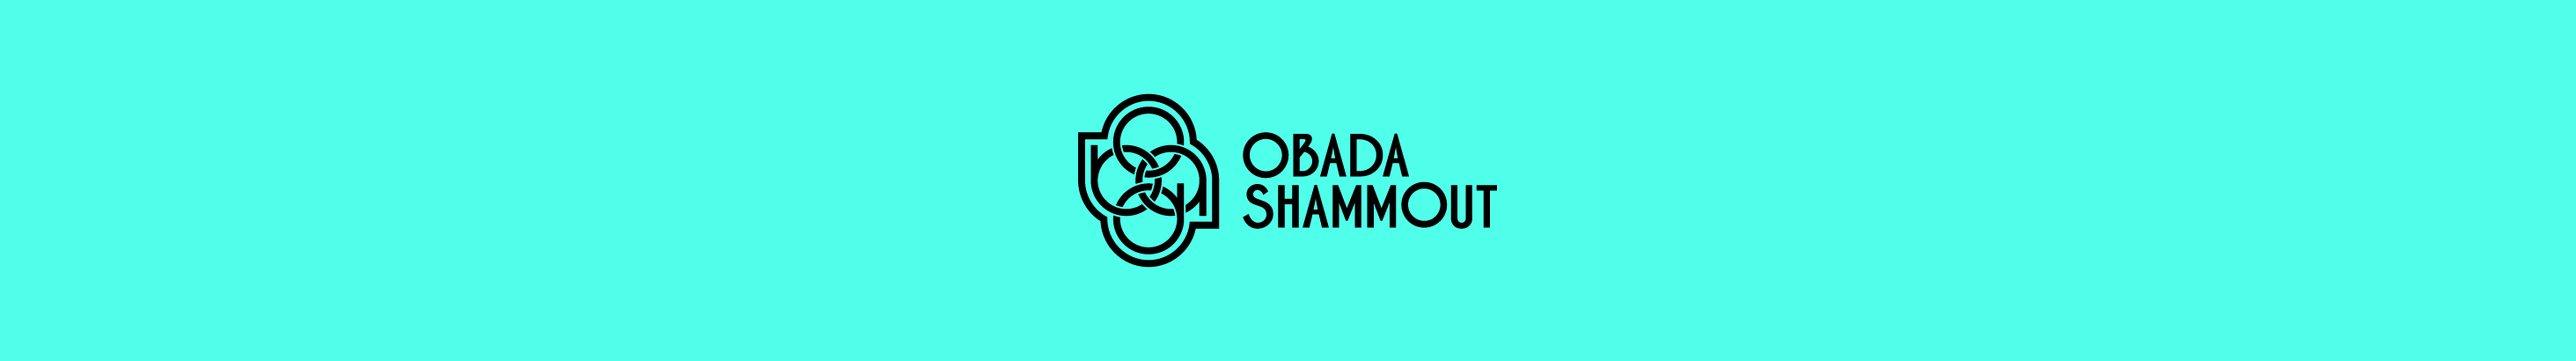 Obada Shammout's profile banner